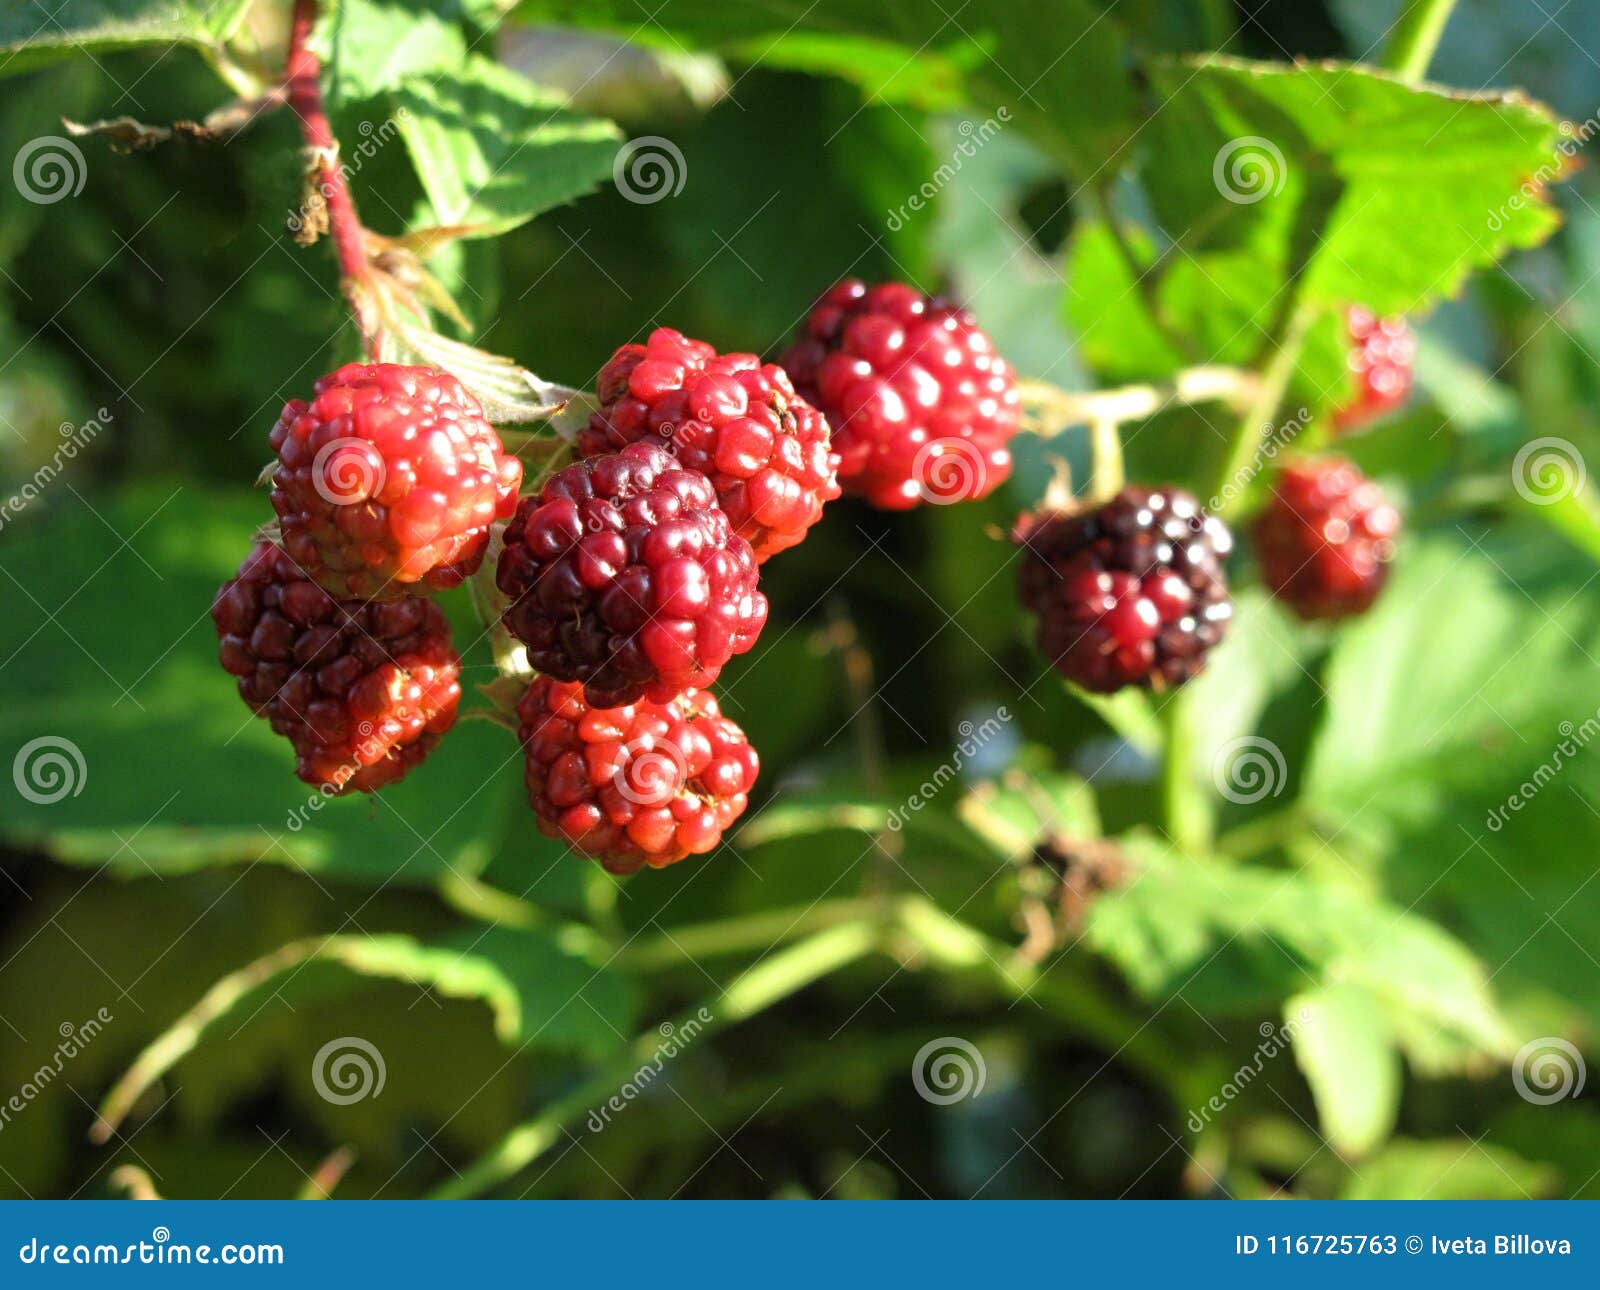 detail of immature blackberries